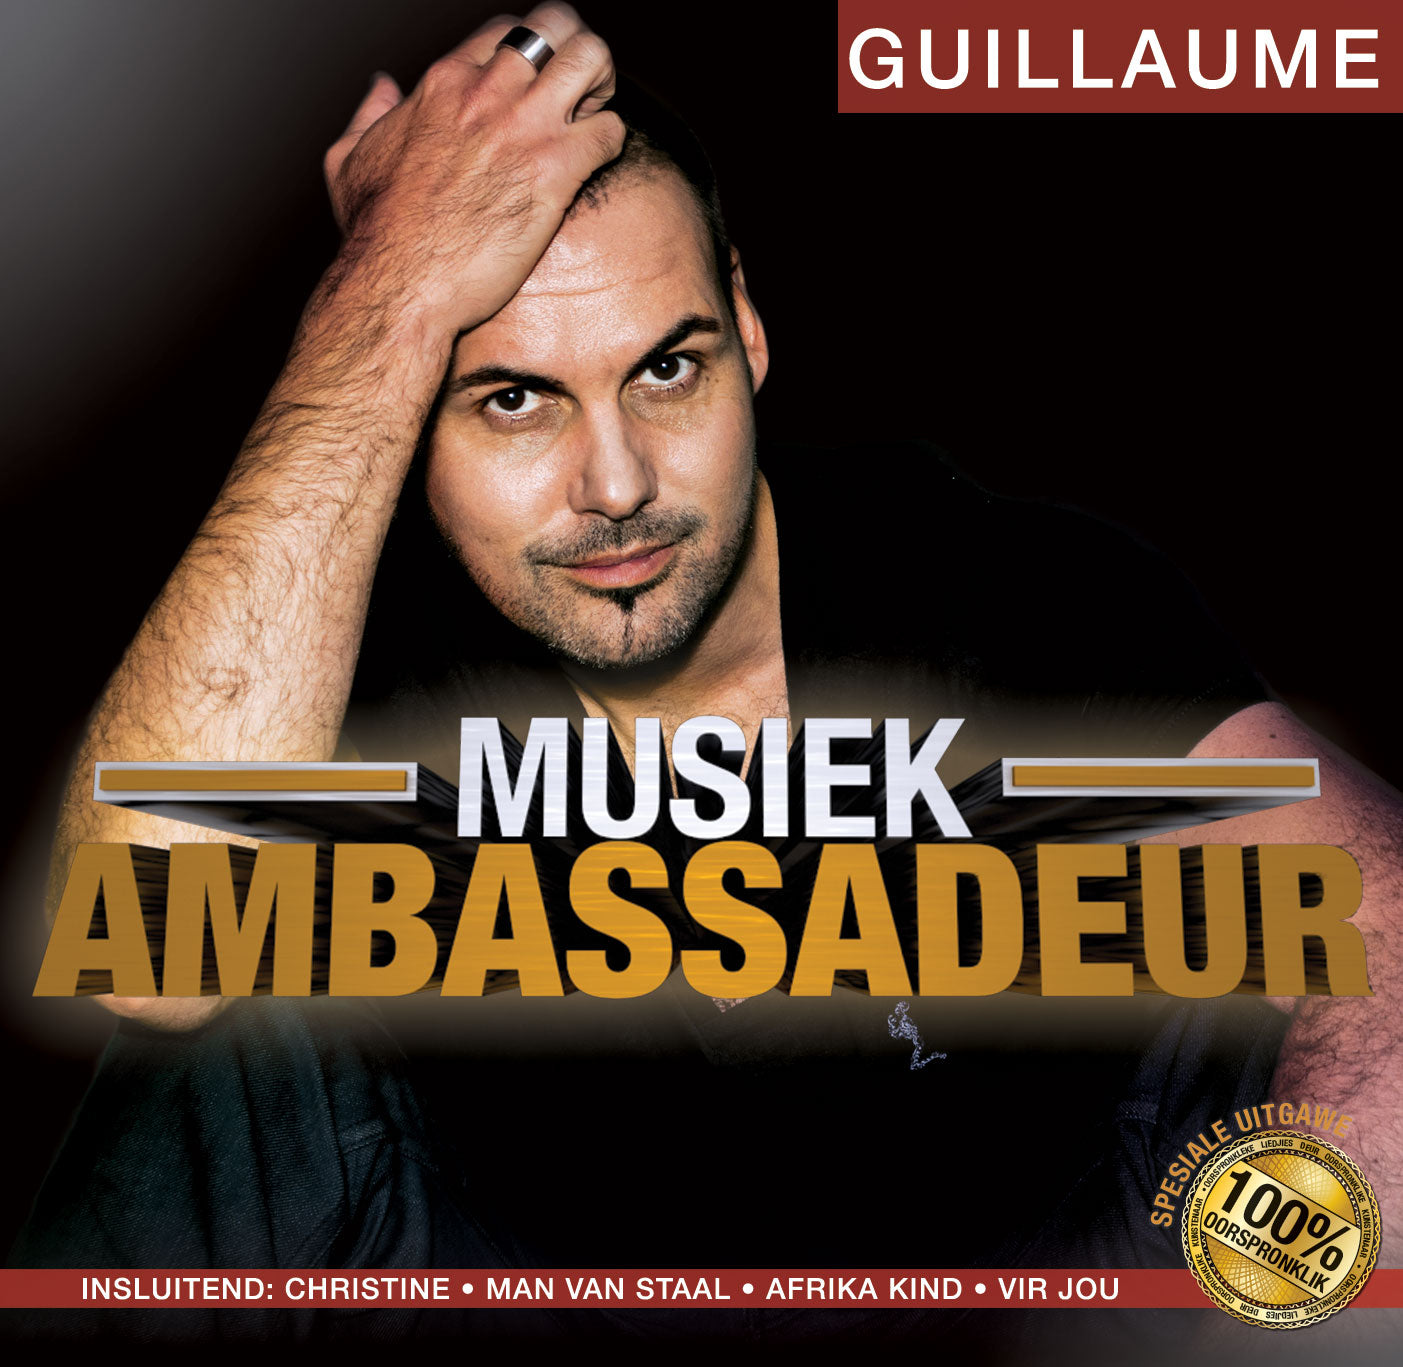 Musiek Ambassadeur - Guillaume_ VONK MUSIEK